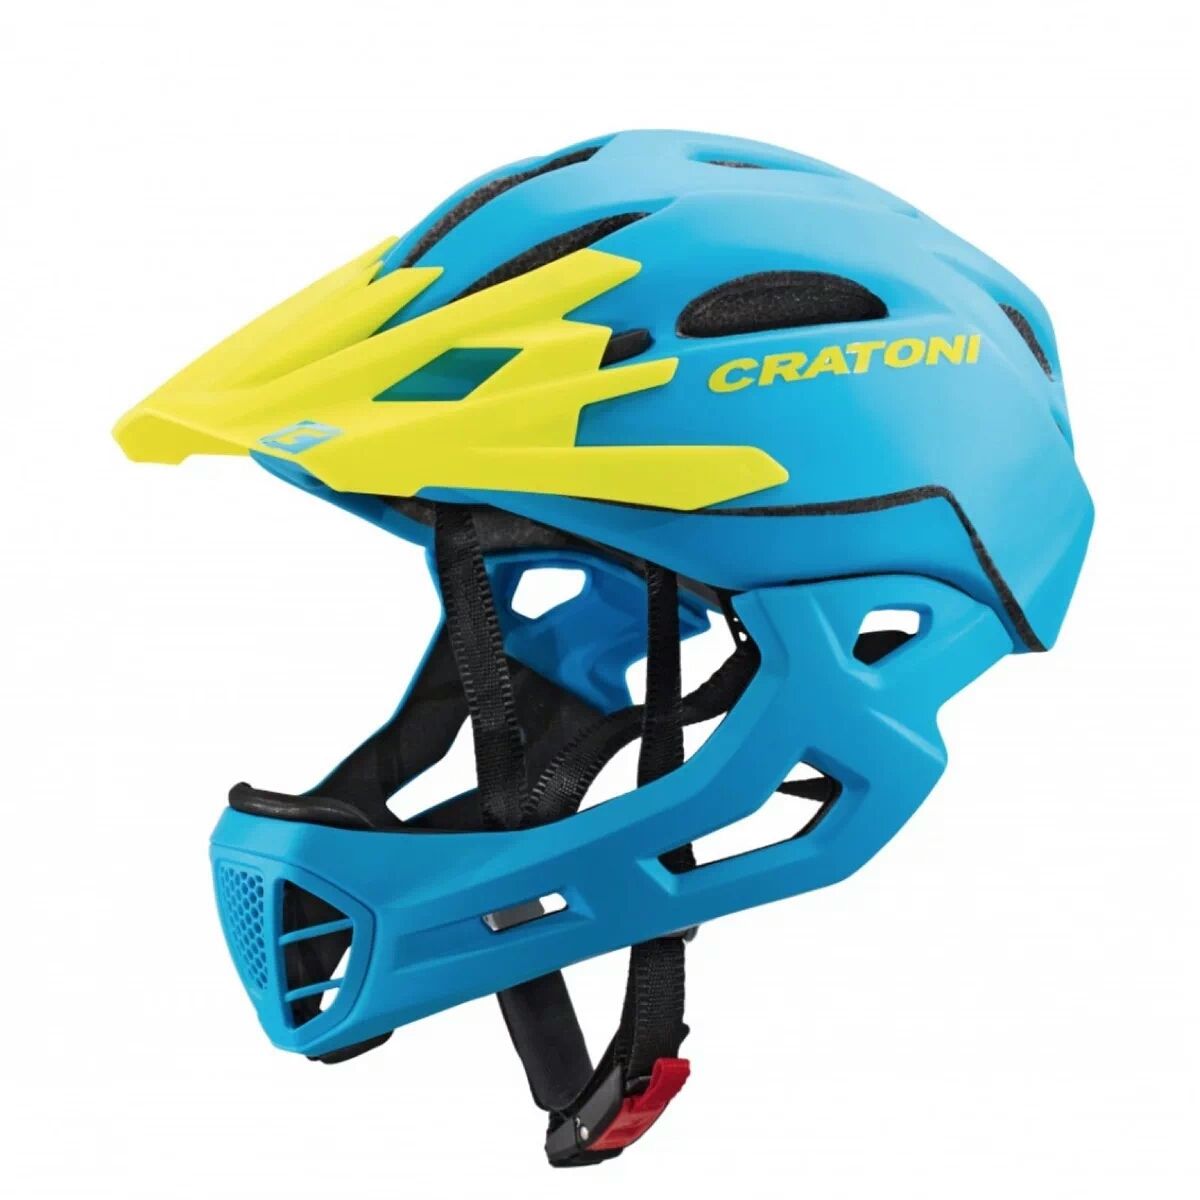 Craoni prokatony children's balance bike helmet full-helmet scooter bicycle riding protective gear